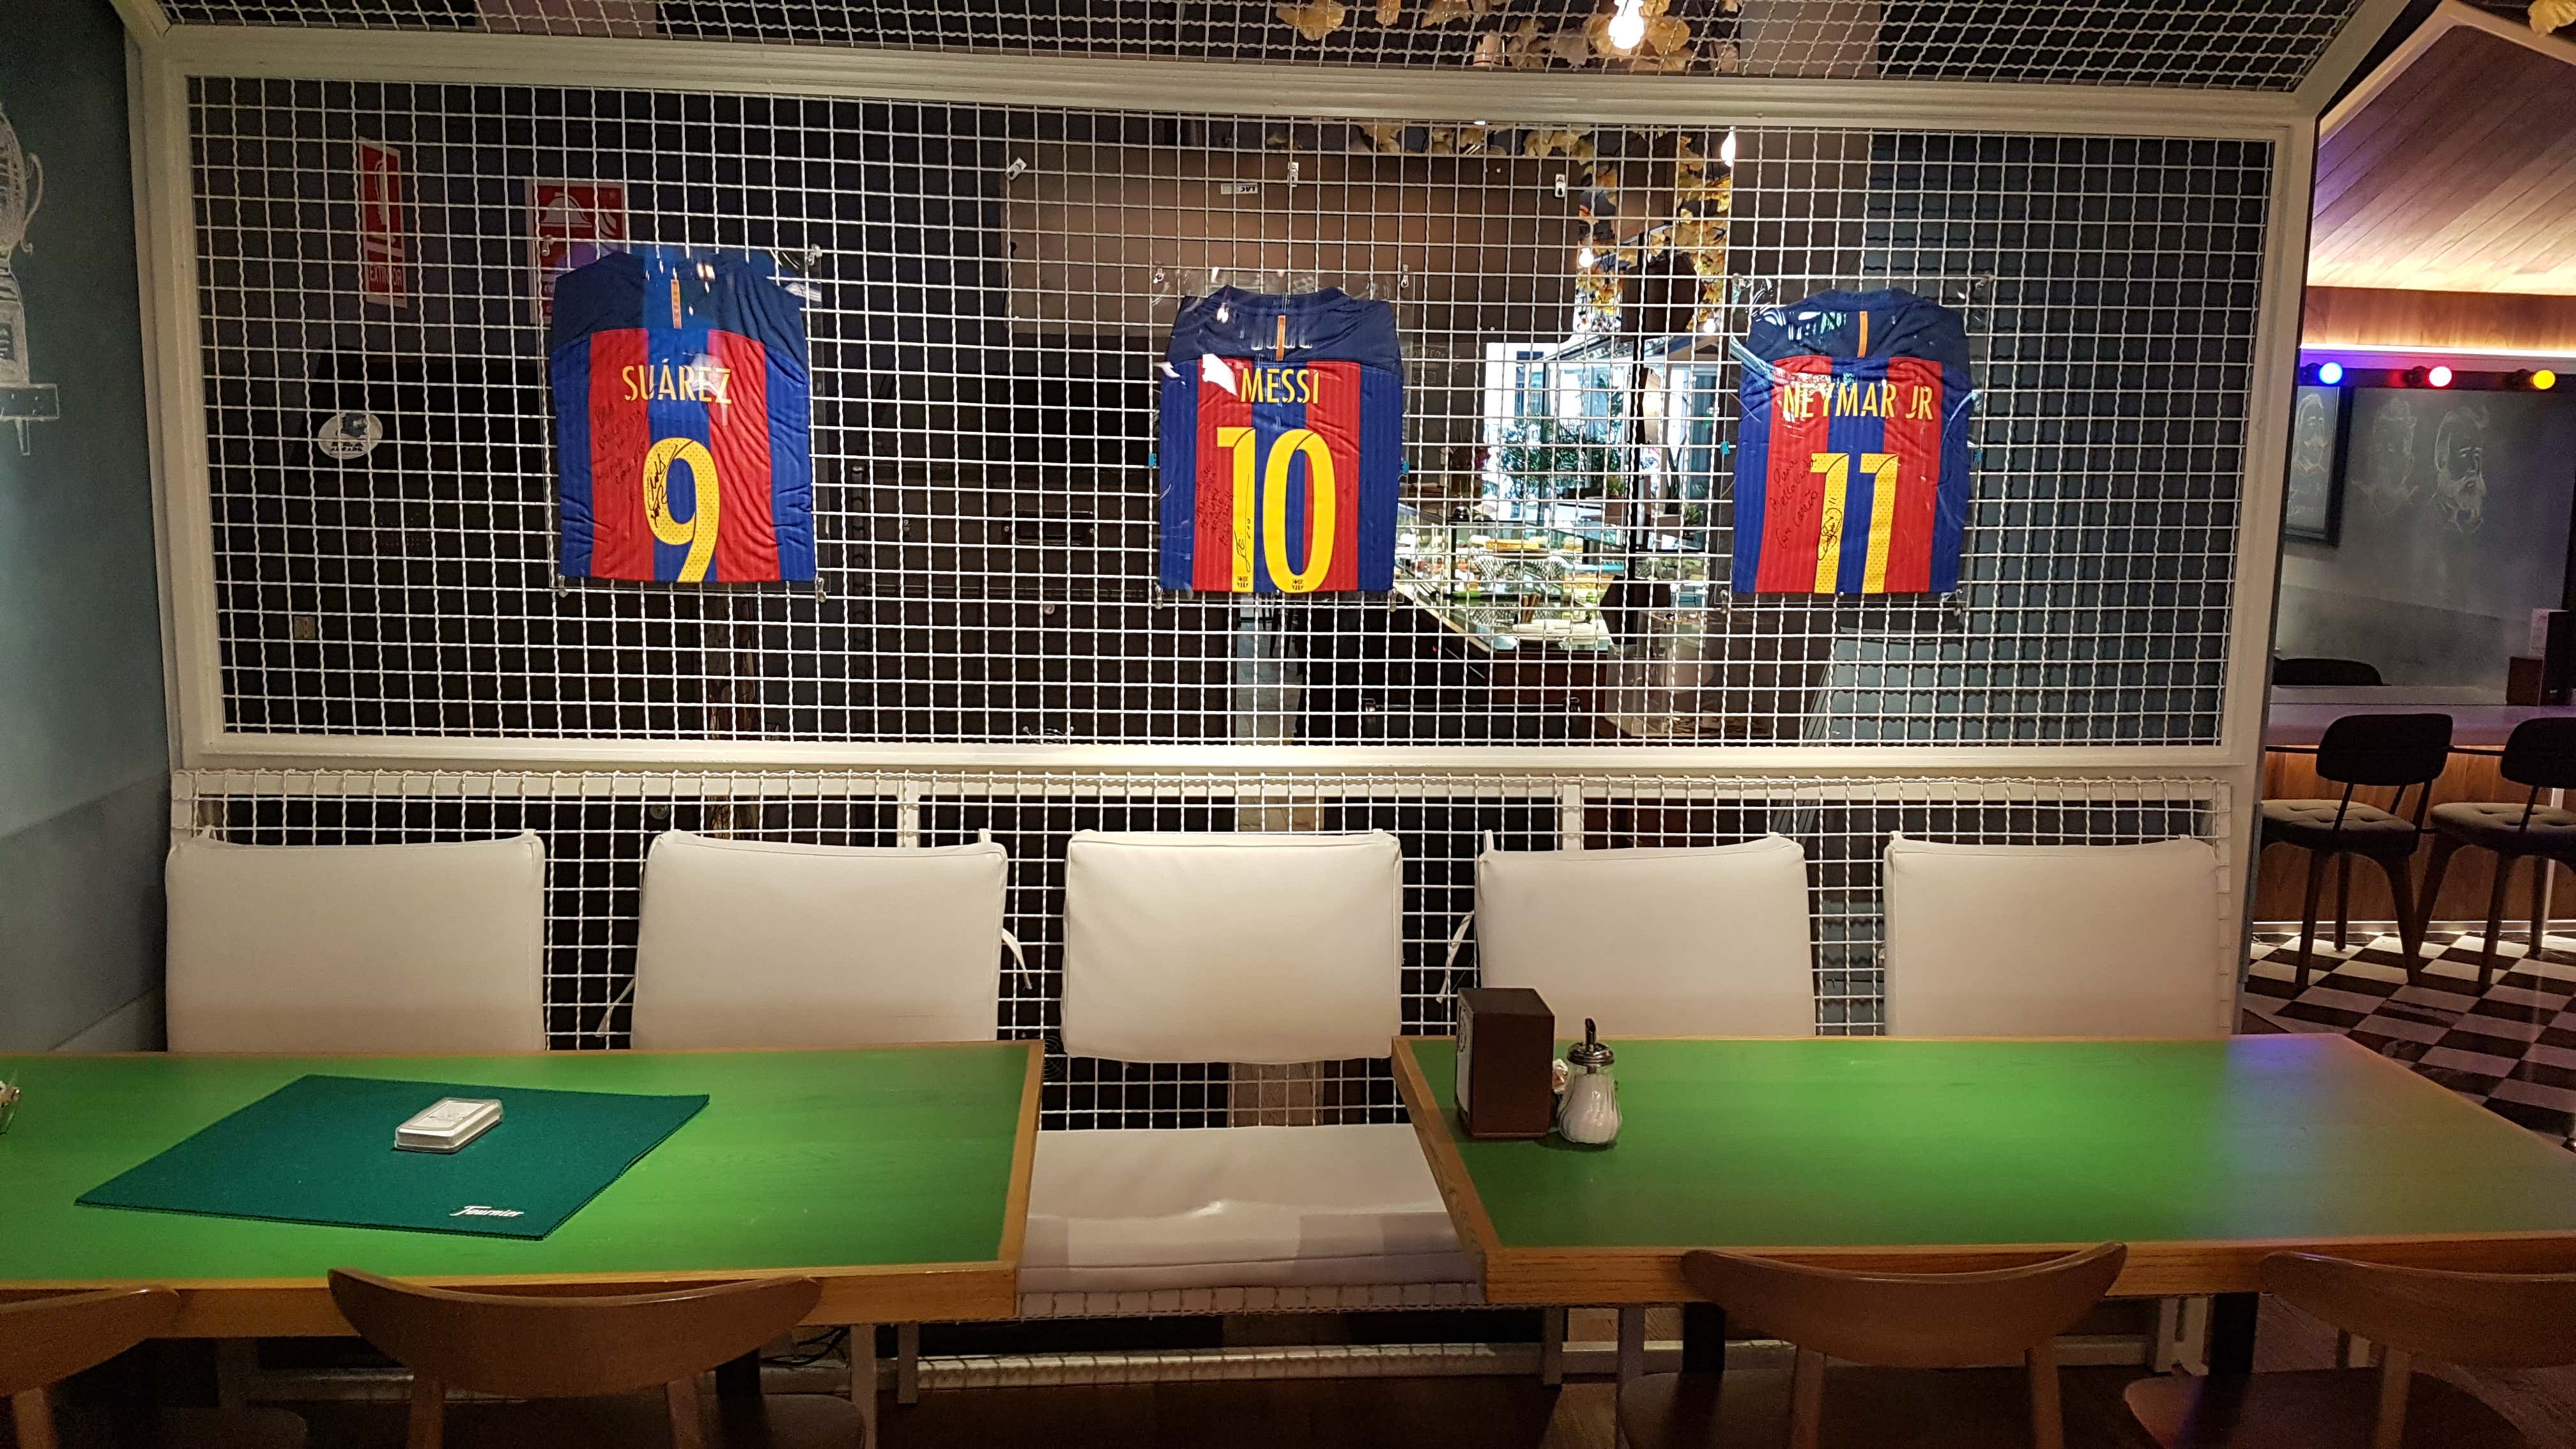 Galerie: Das ist Lionel Messis Restaurant in Barcelona! | Goal.com